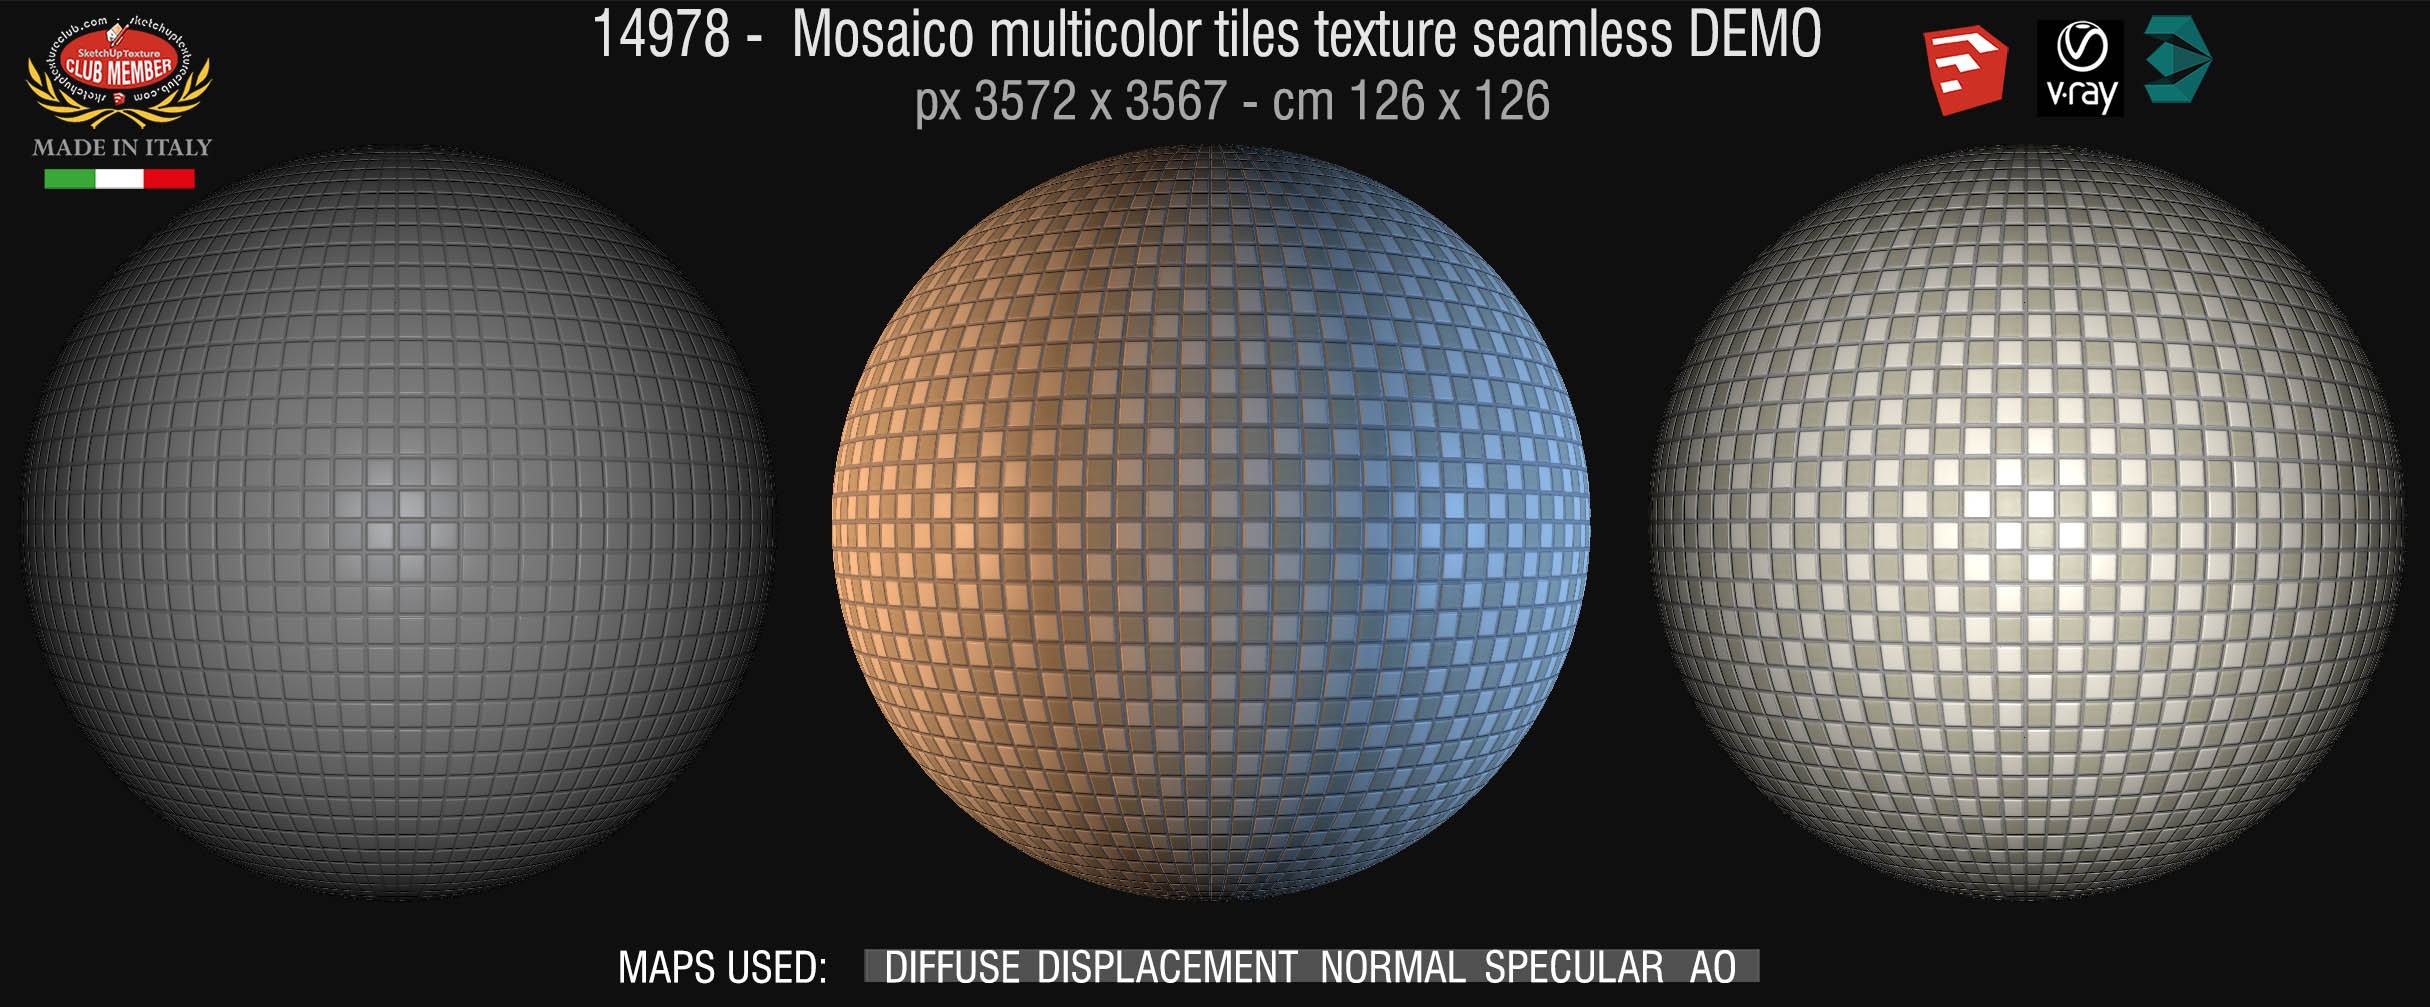 14978 Mosaico multicolor tiles texture seamless + maps DEMO